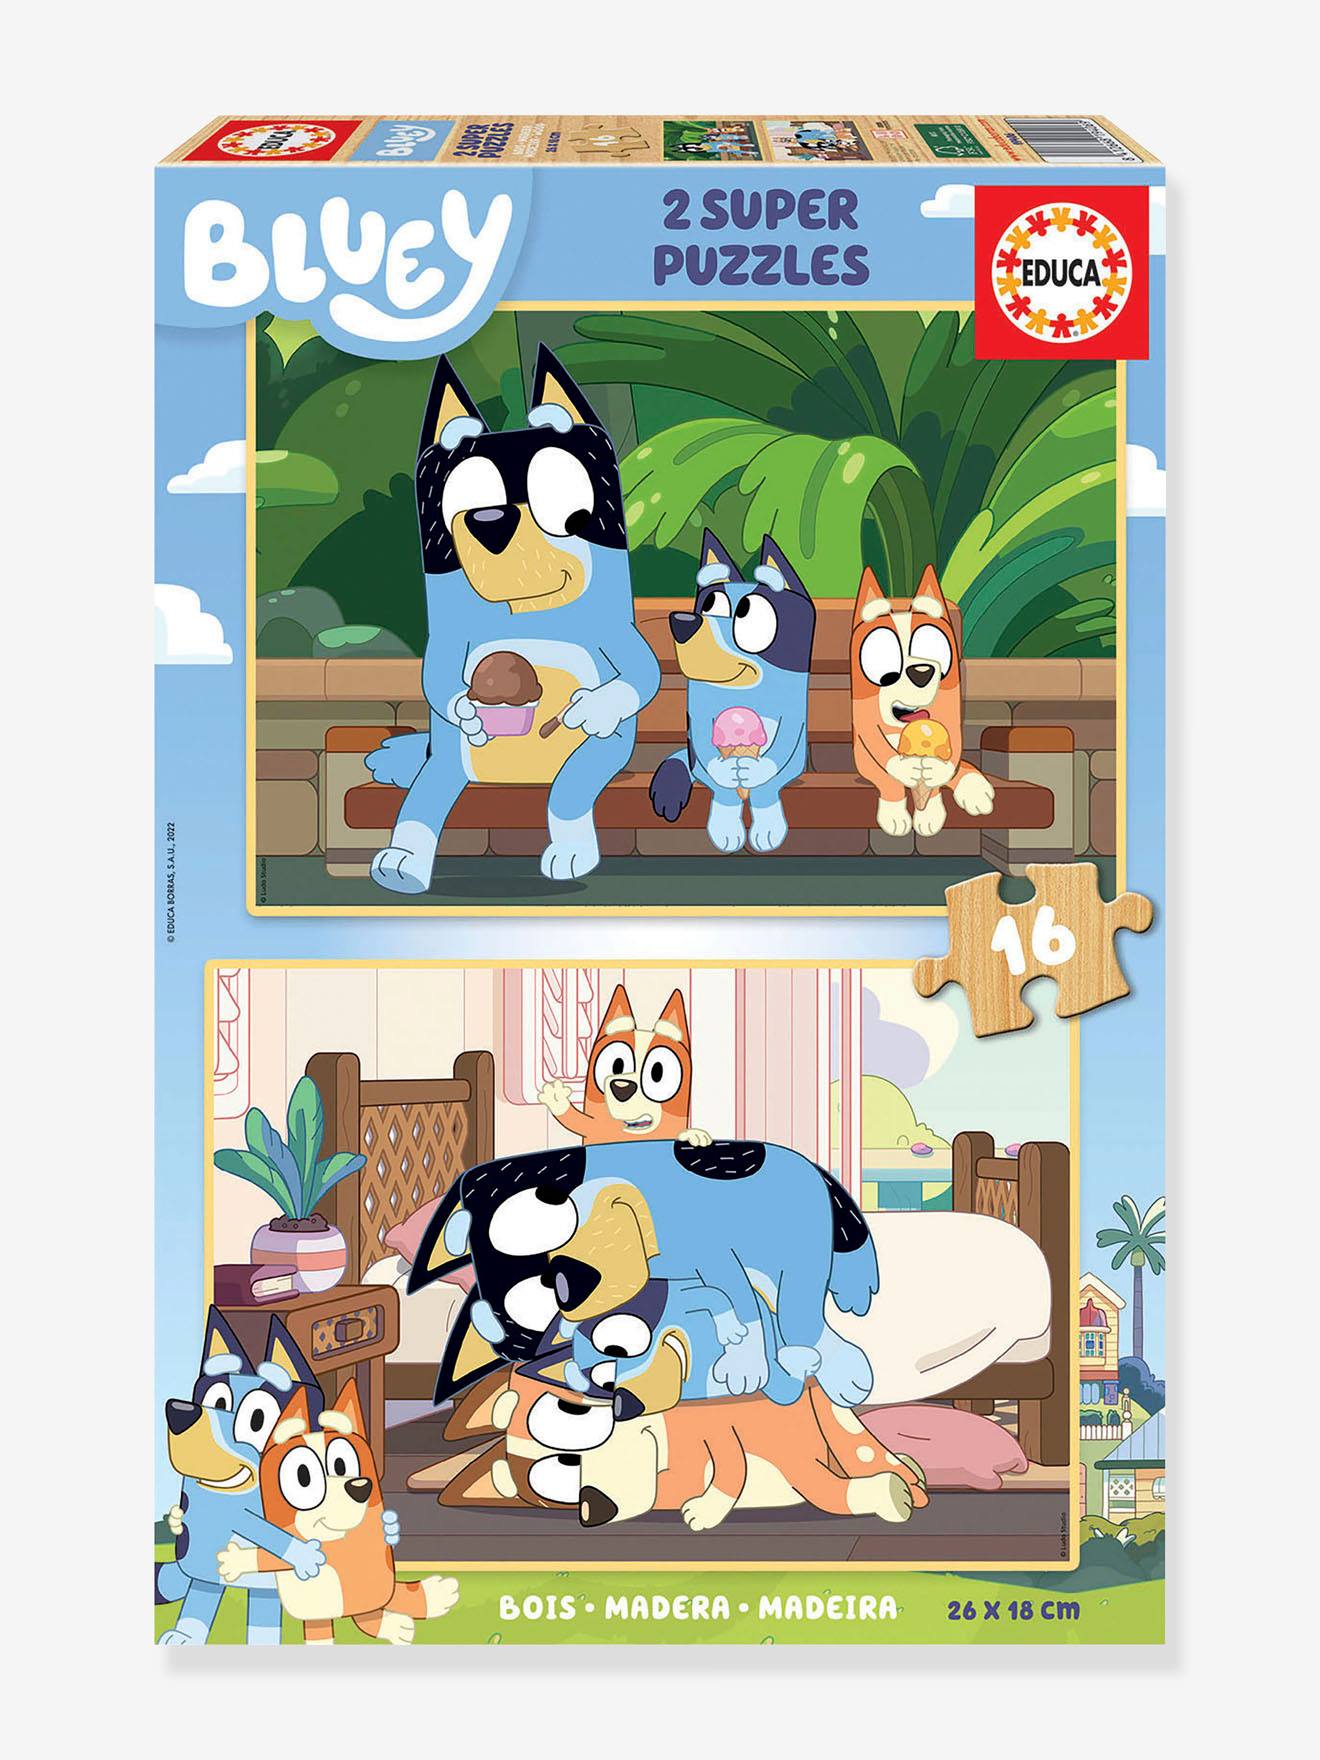 2 Wooden Super Puzzles, 16 Pieces - Bluey - EDUCA blue